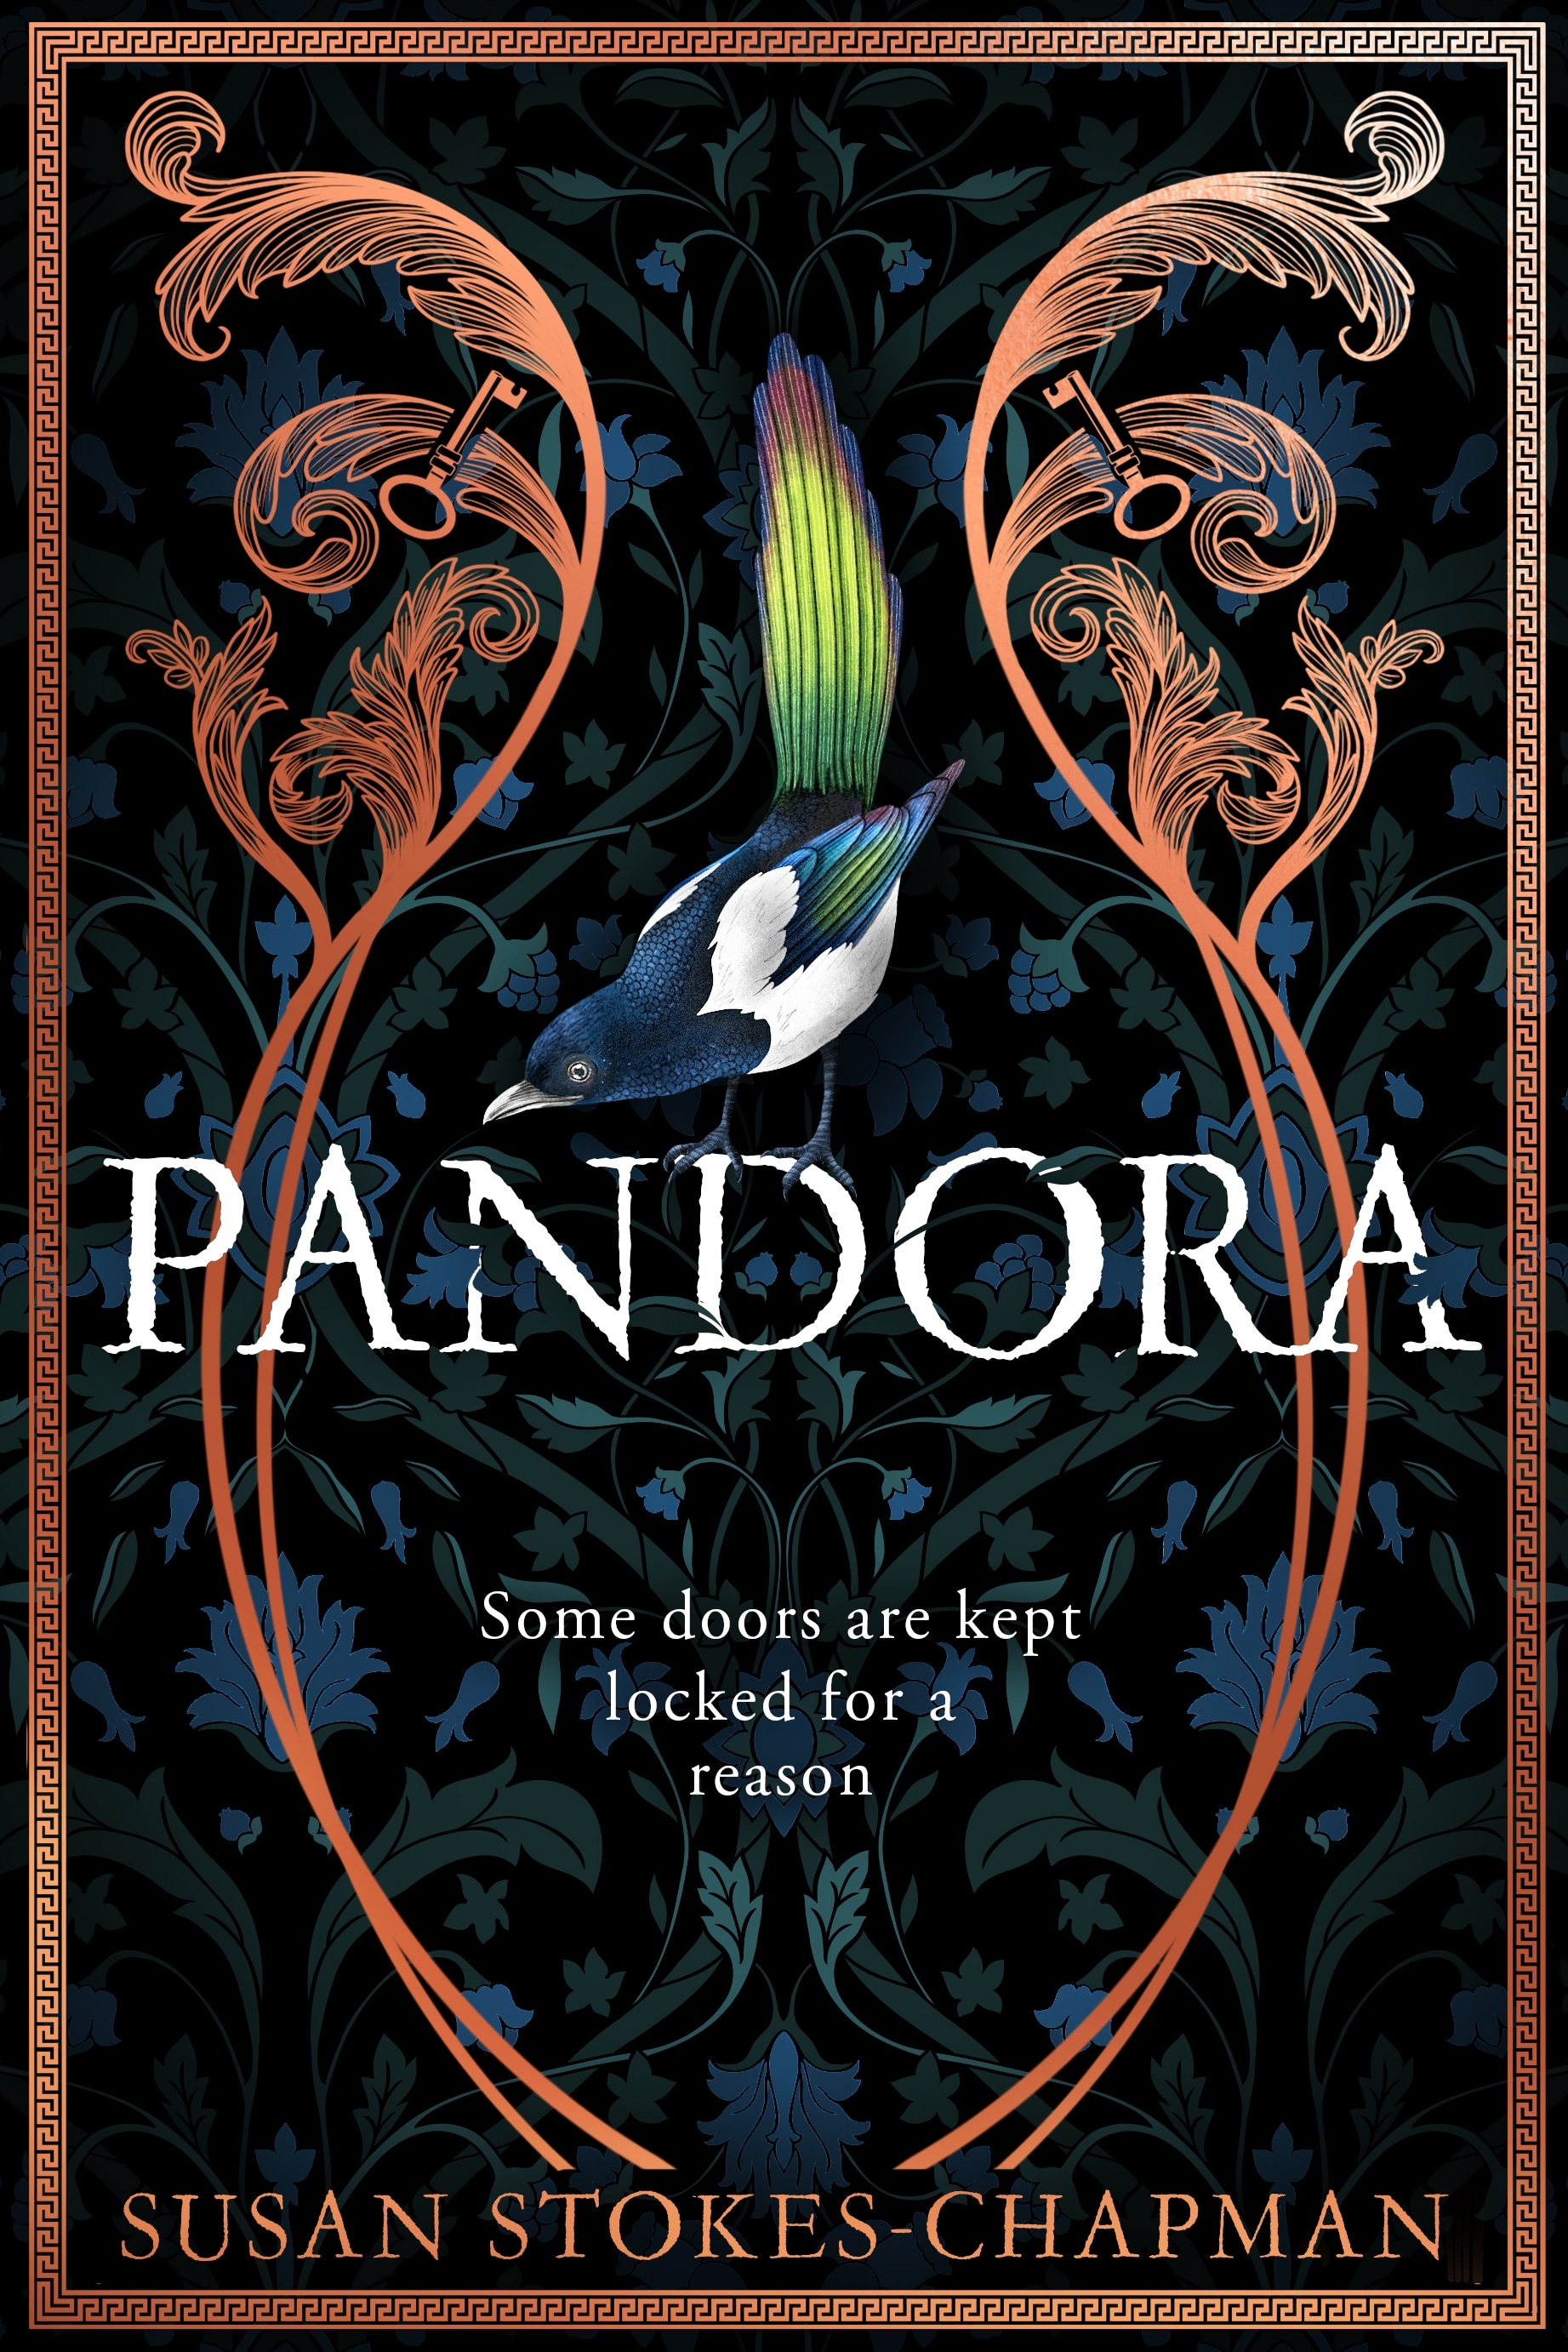 Book “Pandora” by Susan Stokes-Chapman — January 27, 2022